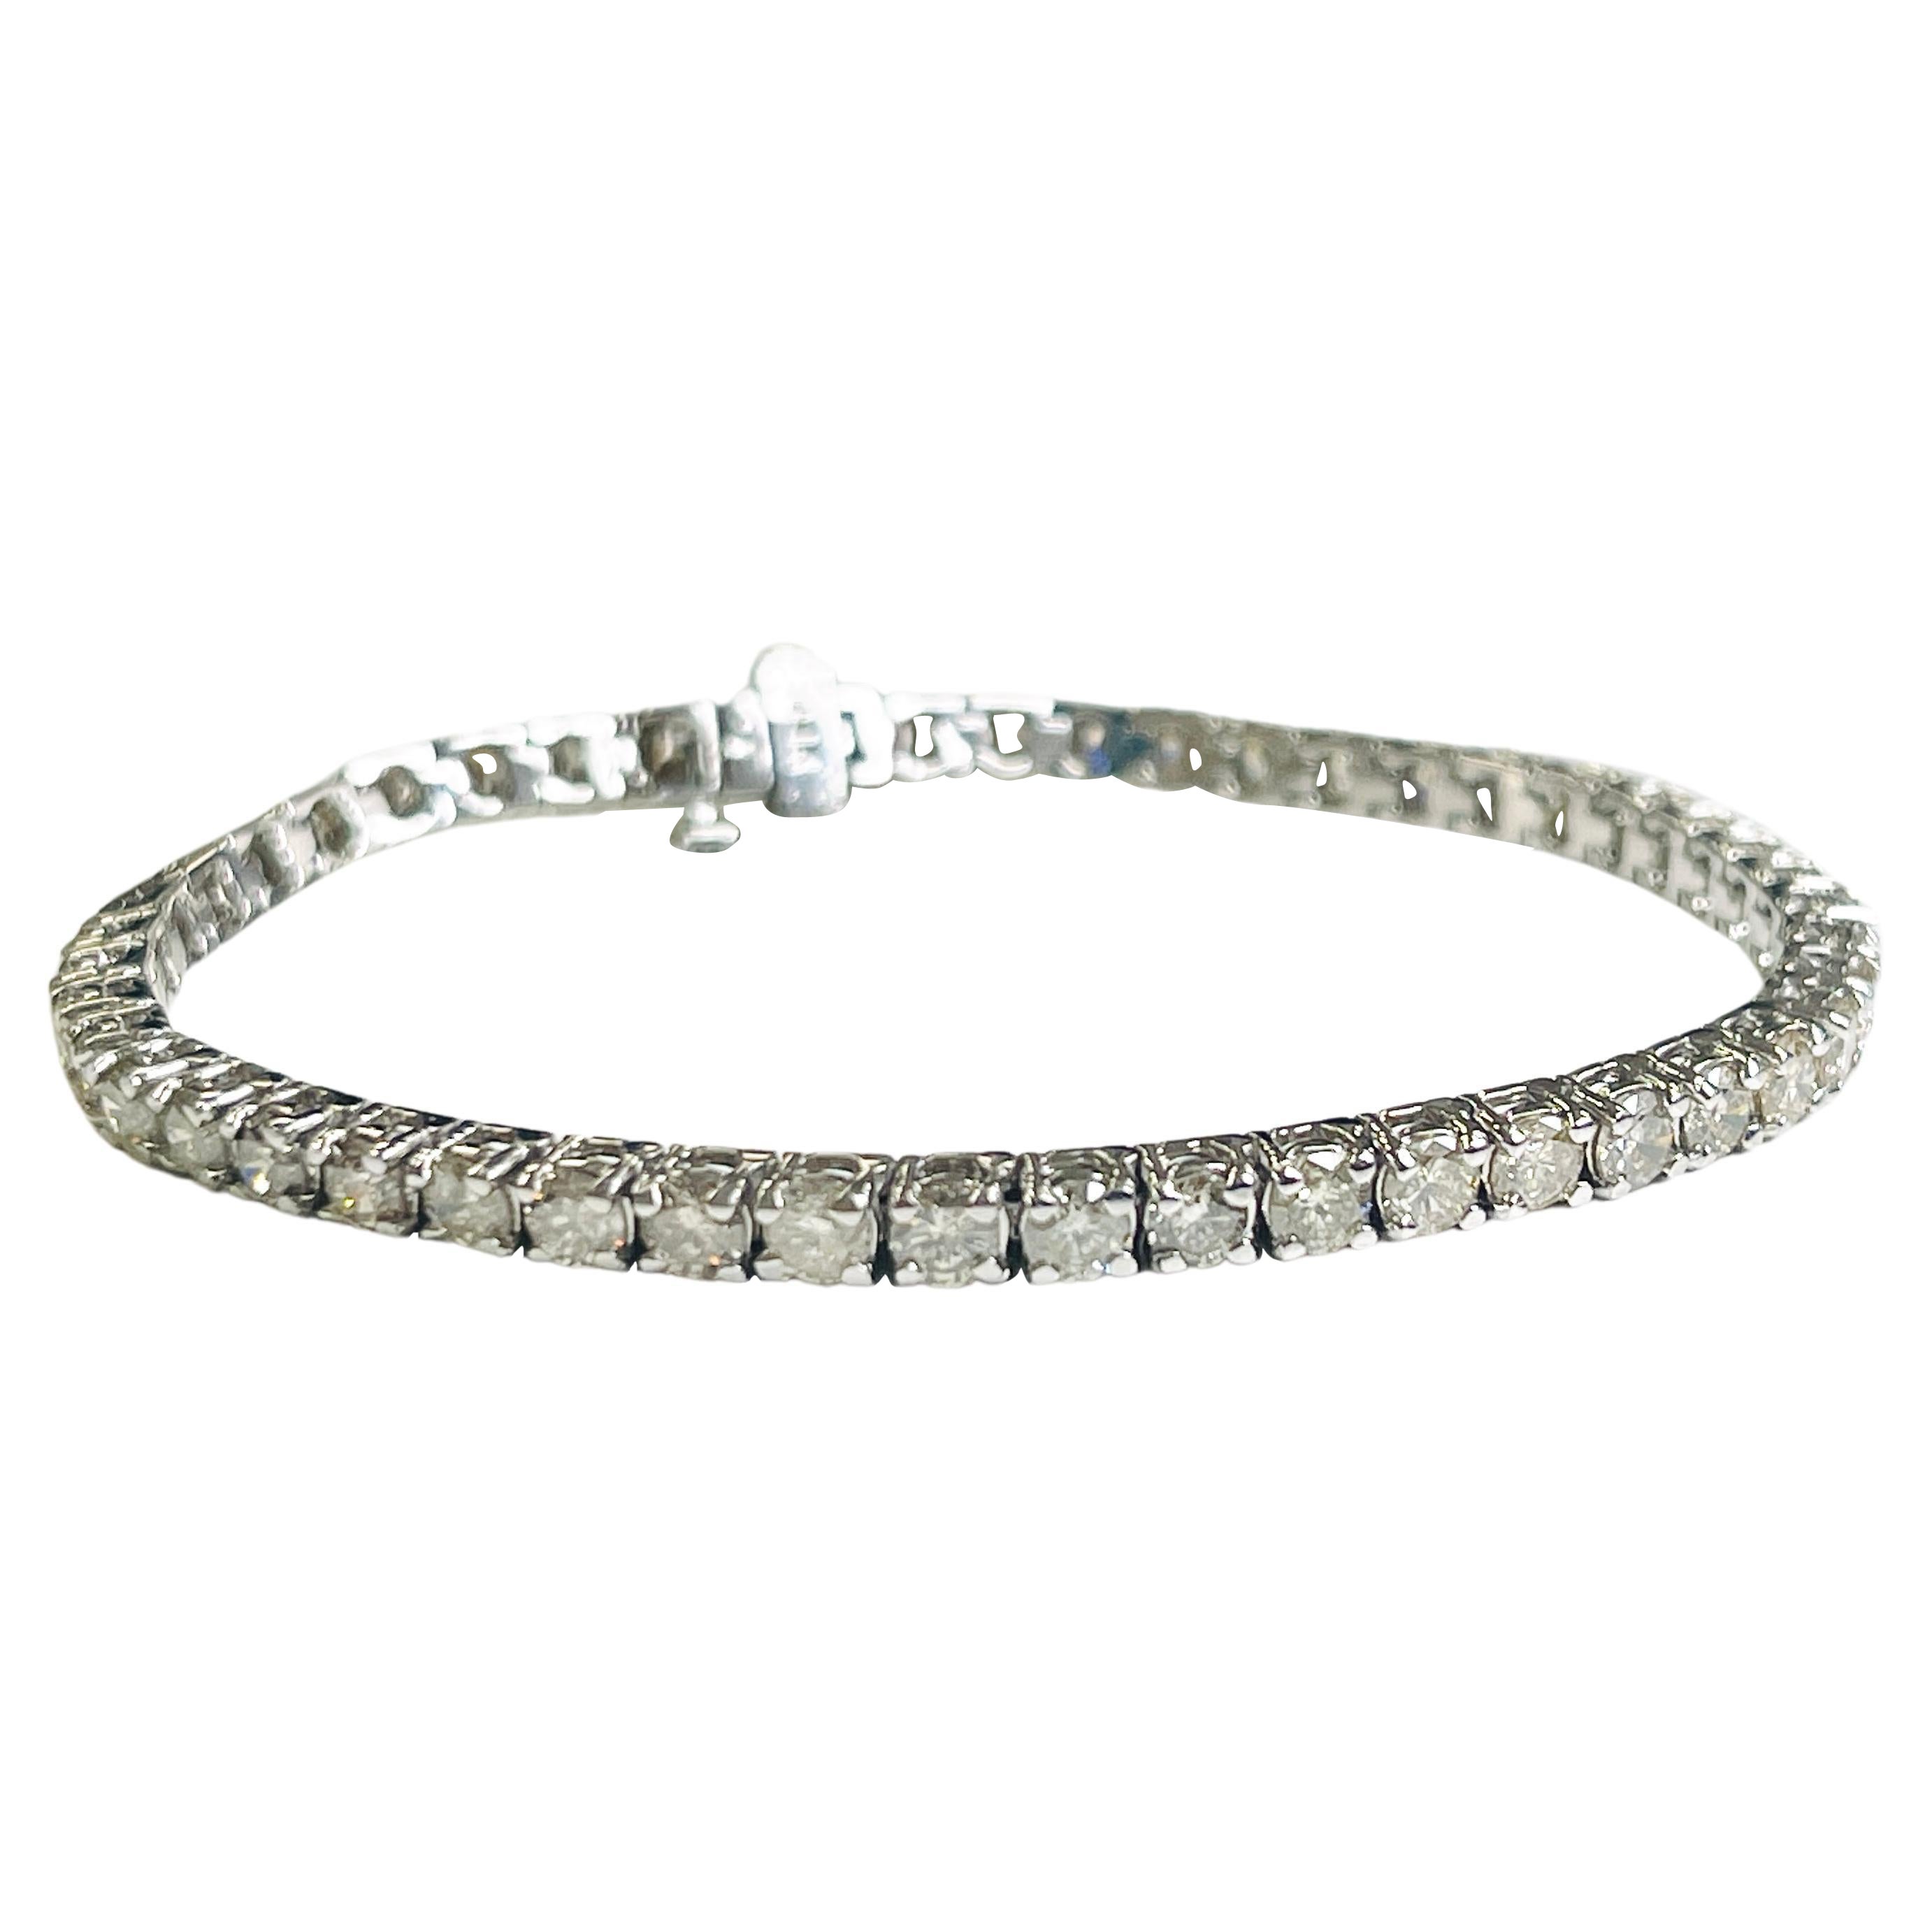 7.38 Carats Diamond Tennis Bracelet in 14k White Gold